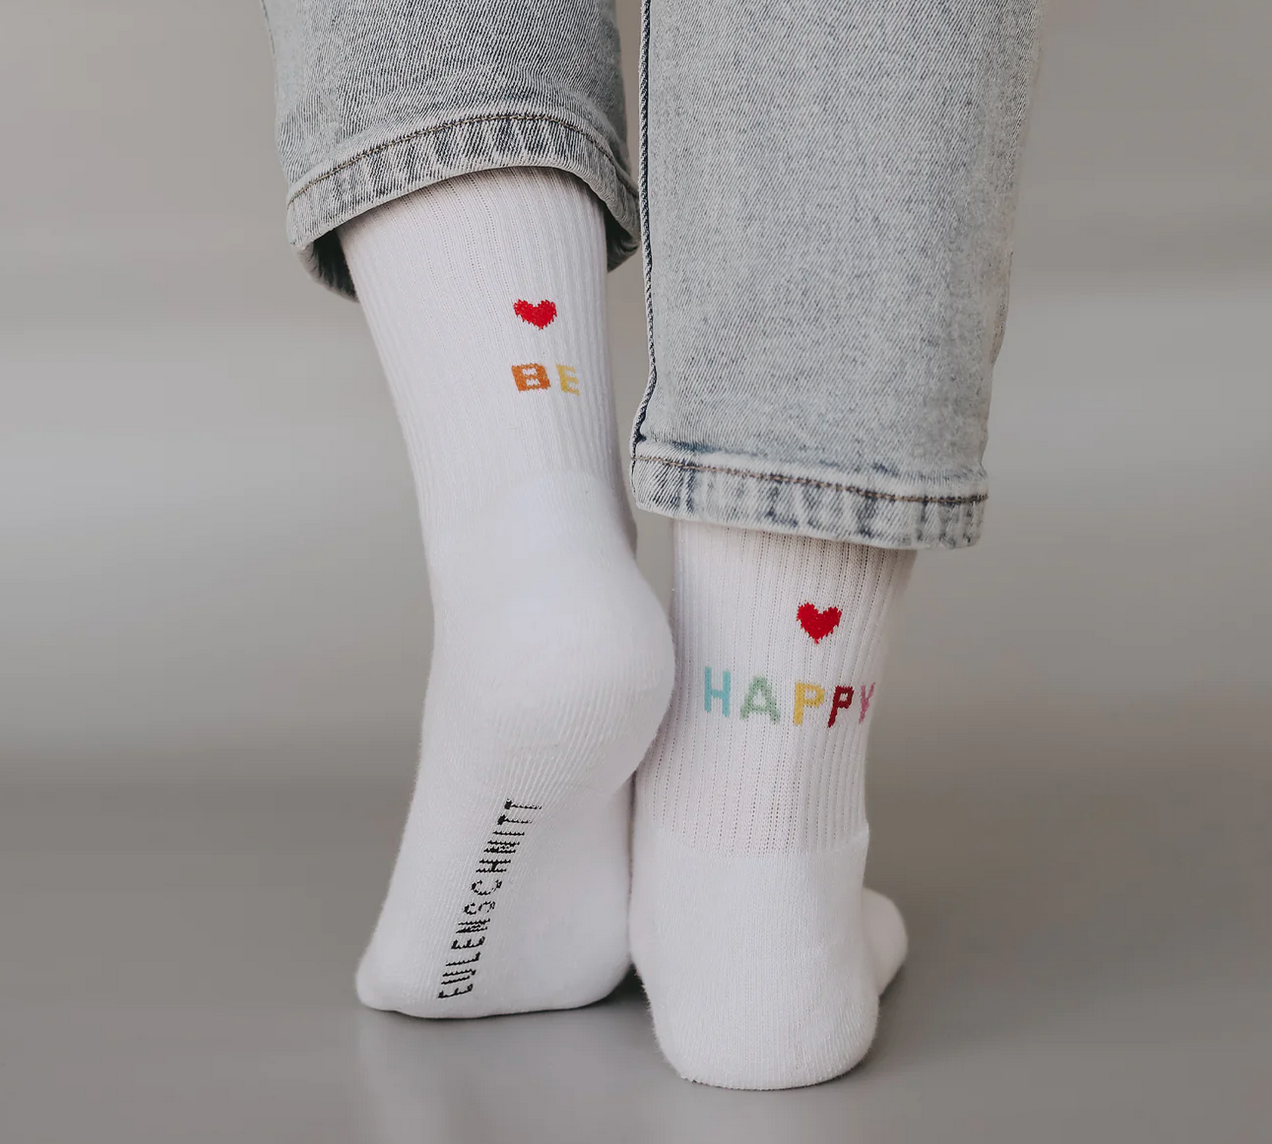 Socken Be happy Eulenschnitt